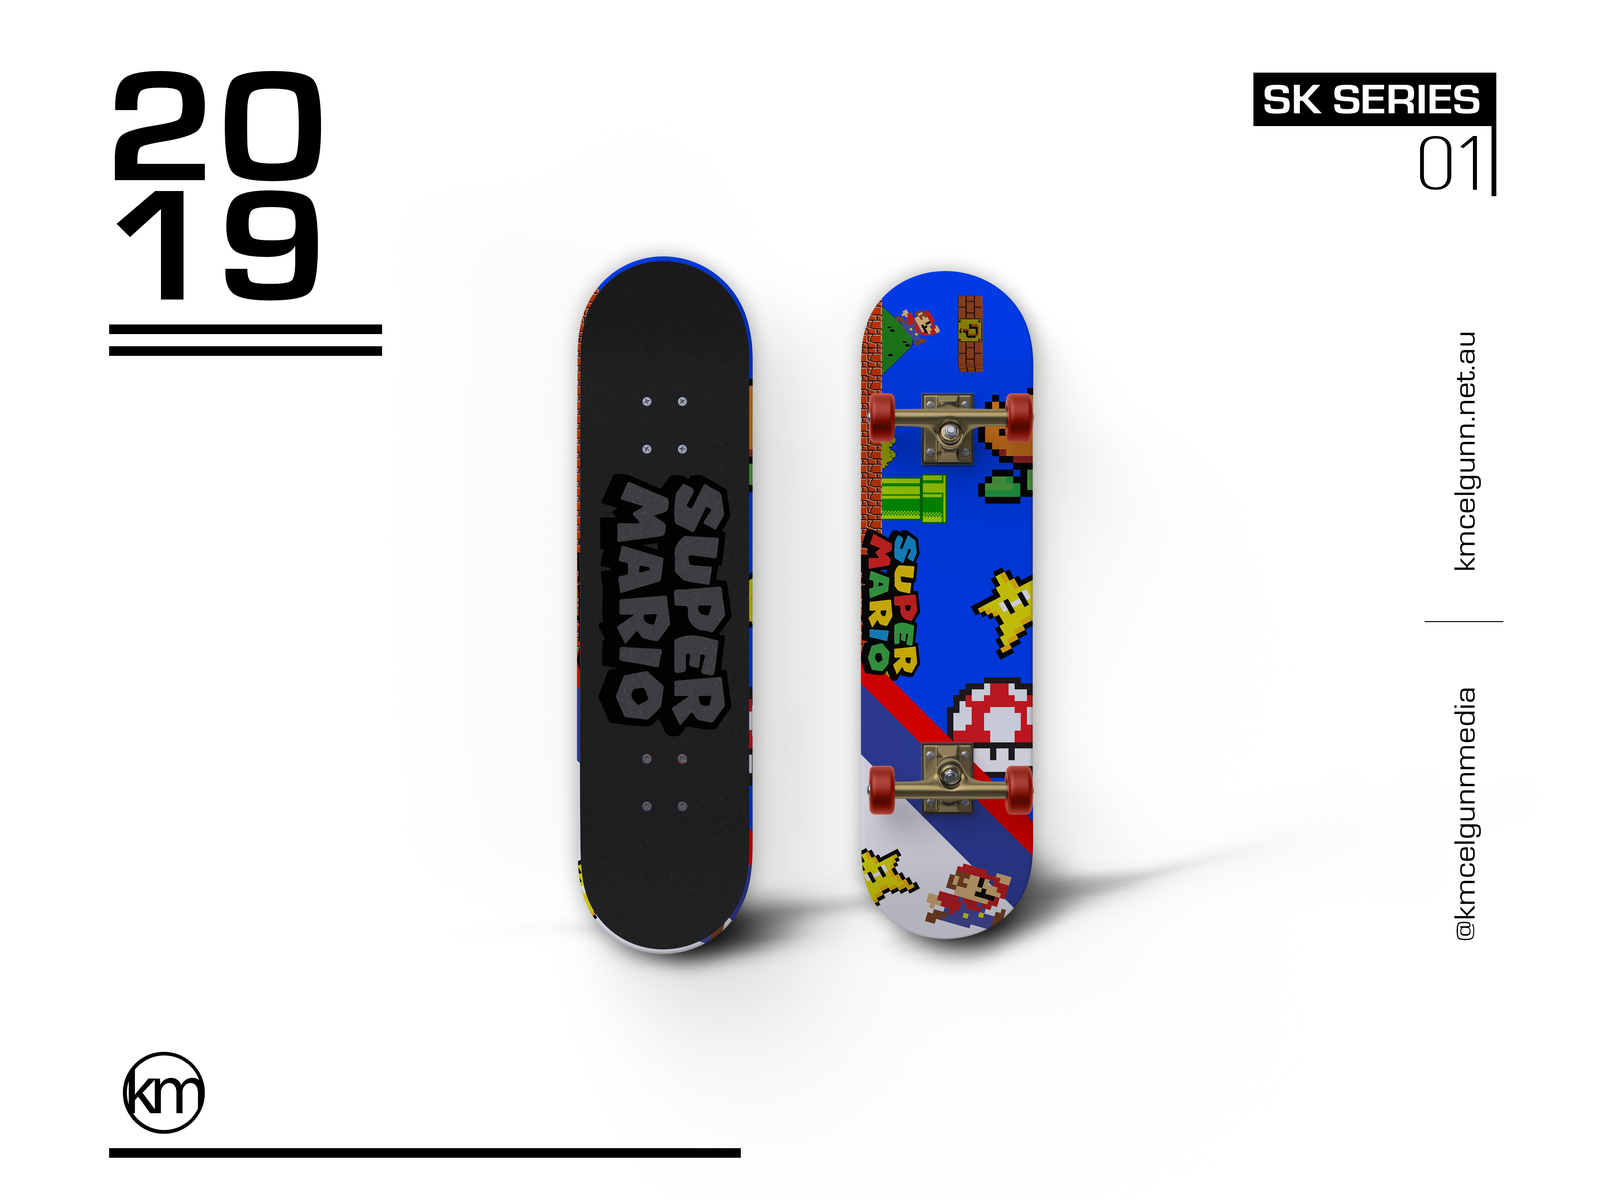 zwaartekracht scheren Onderscheiden SK SERIES 01 | Super Mario Skateboard Deck by Kevin McElgunn on Dribbble